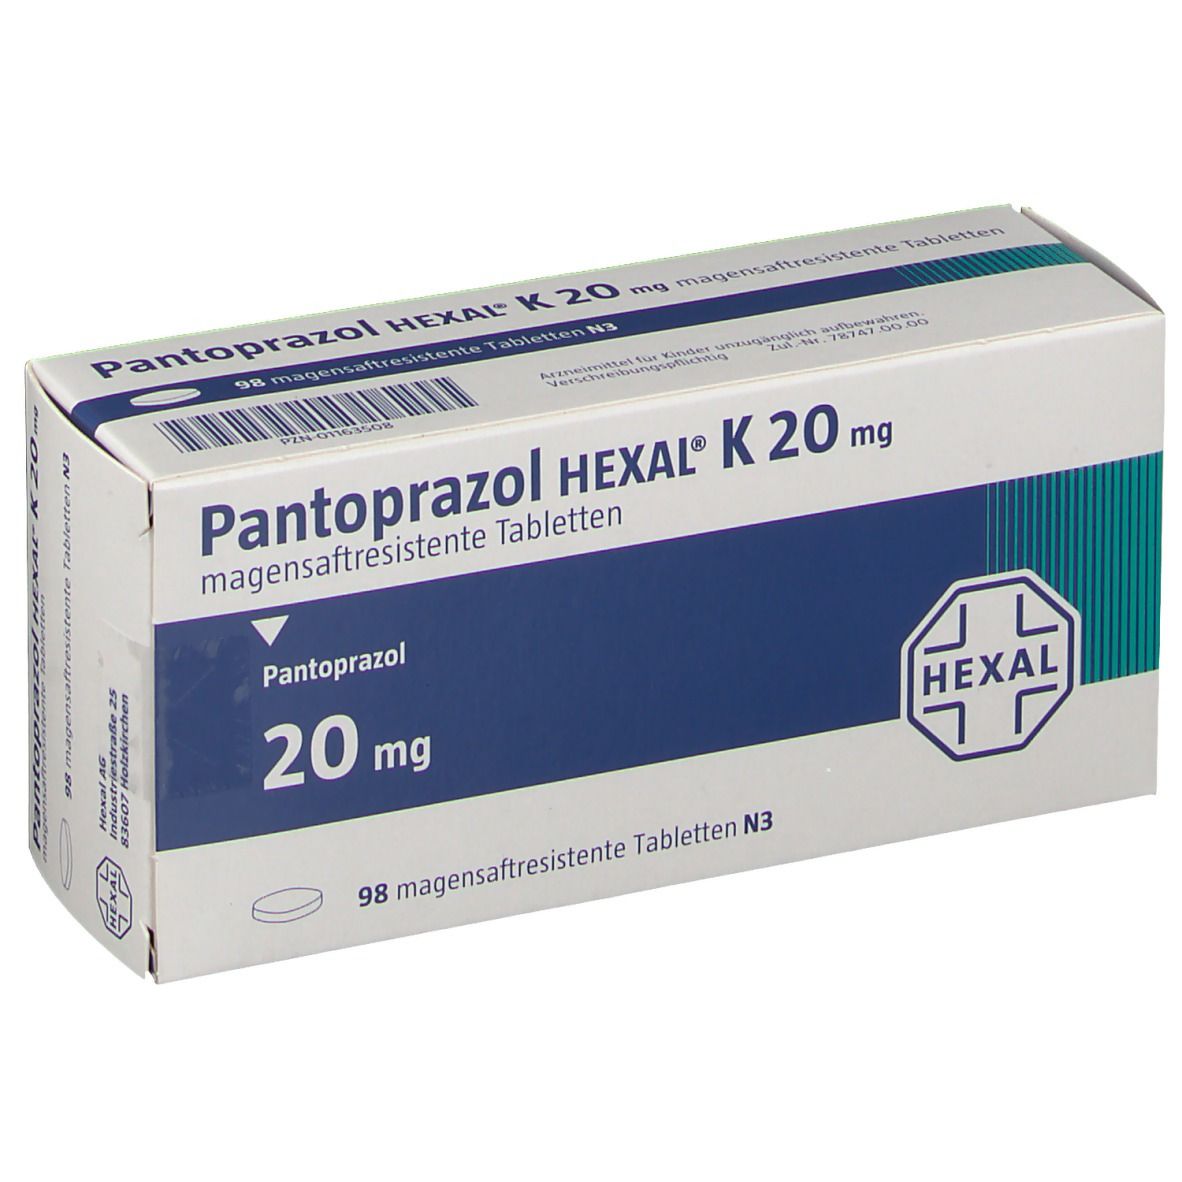 PANTOPRAZOL HEXAL K 20 mg magensaftres. Tabletten